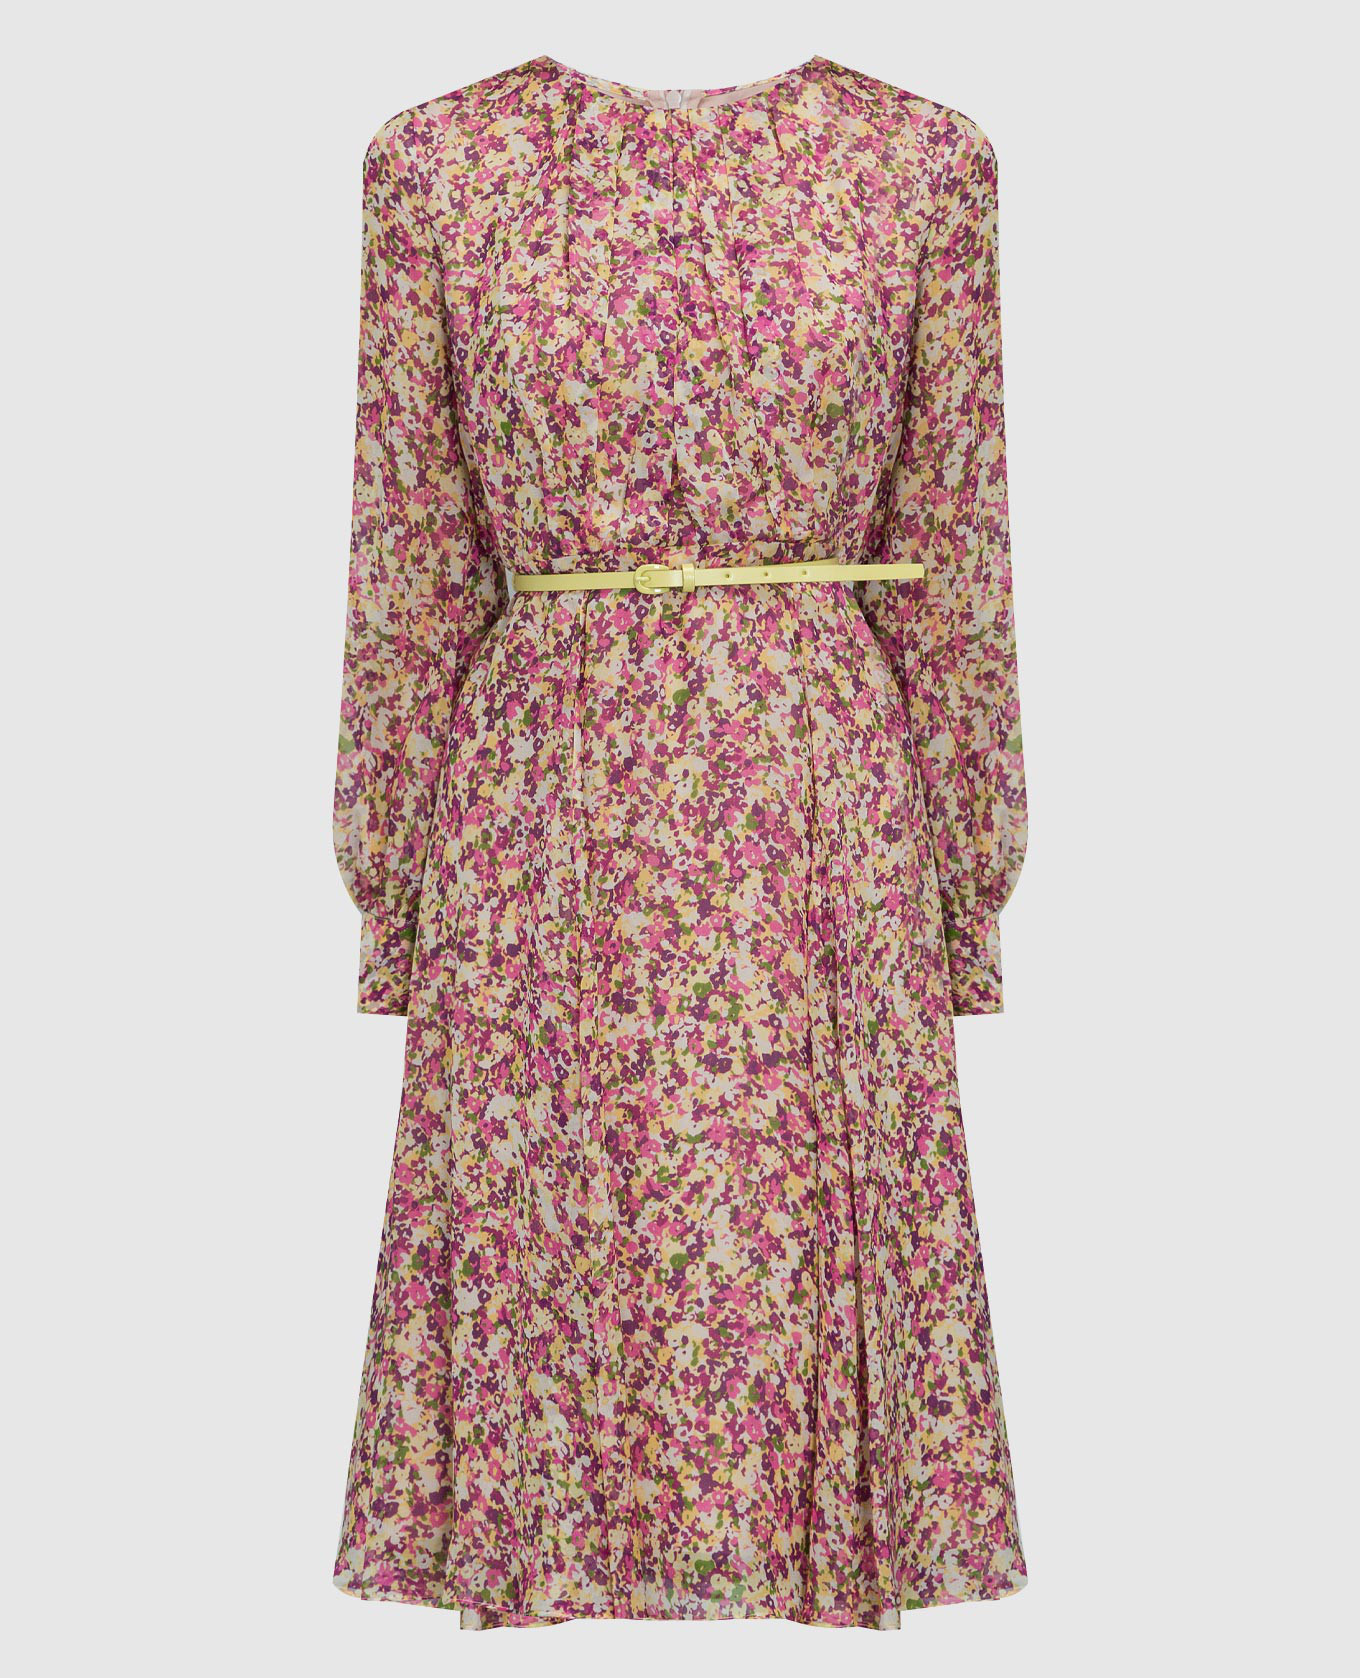 Verusca midi dress made of silk in a floral print